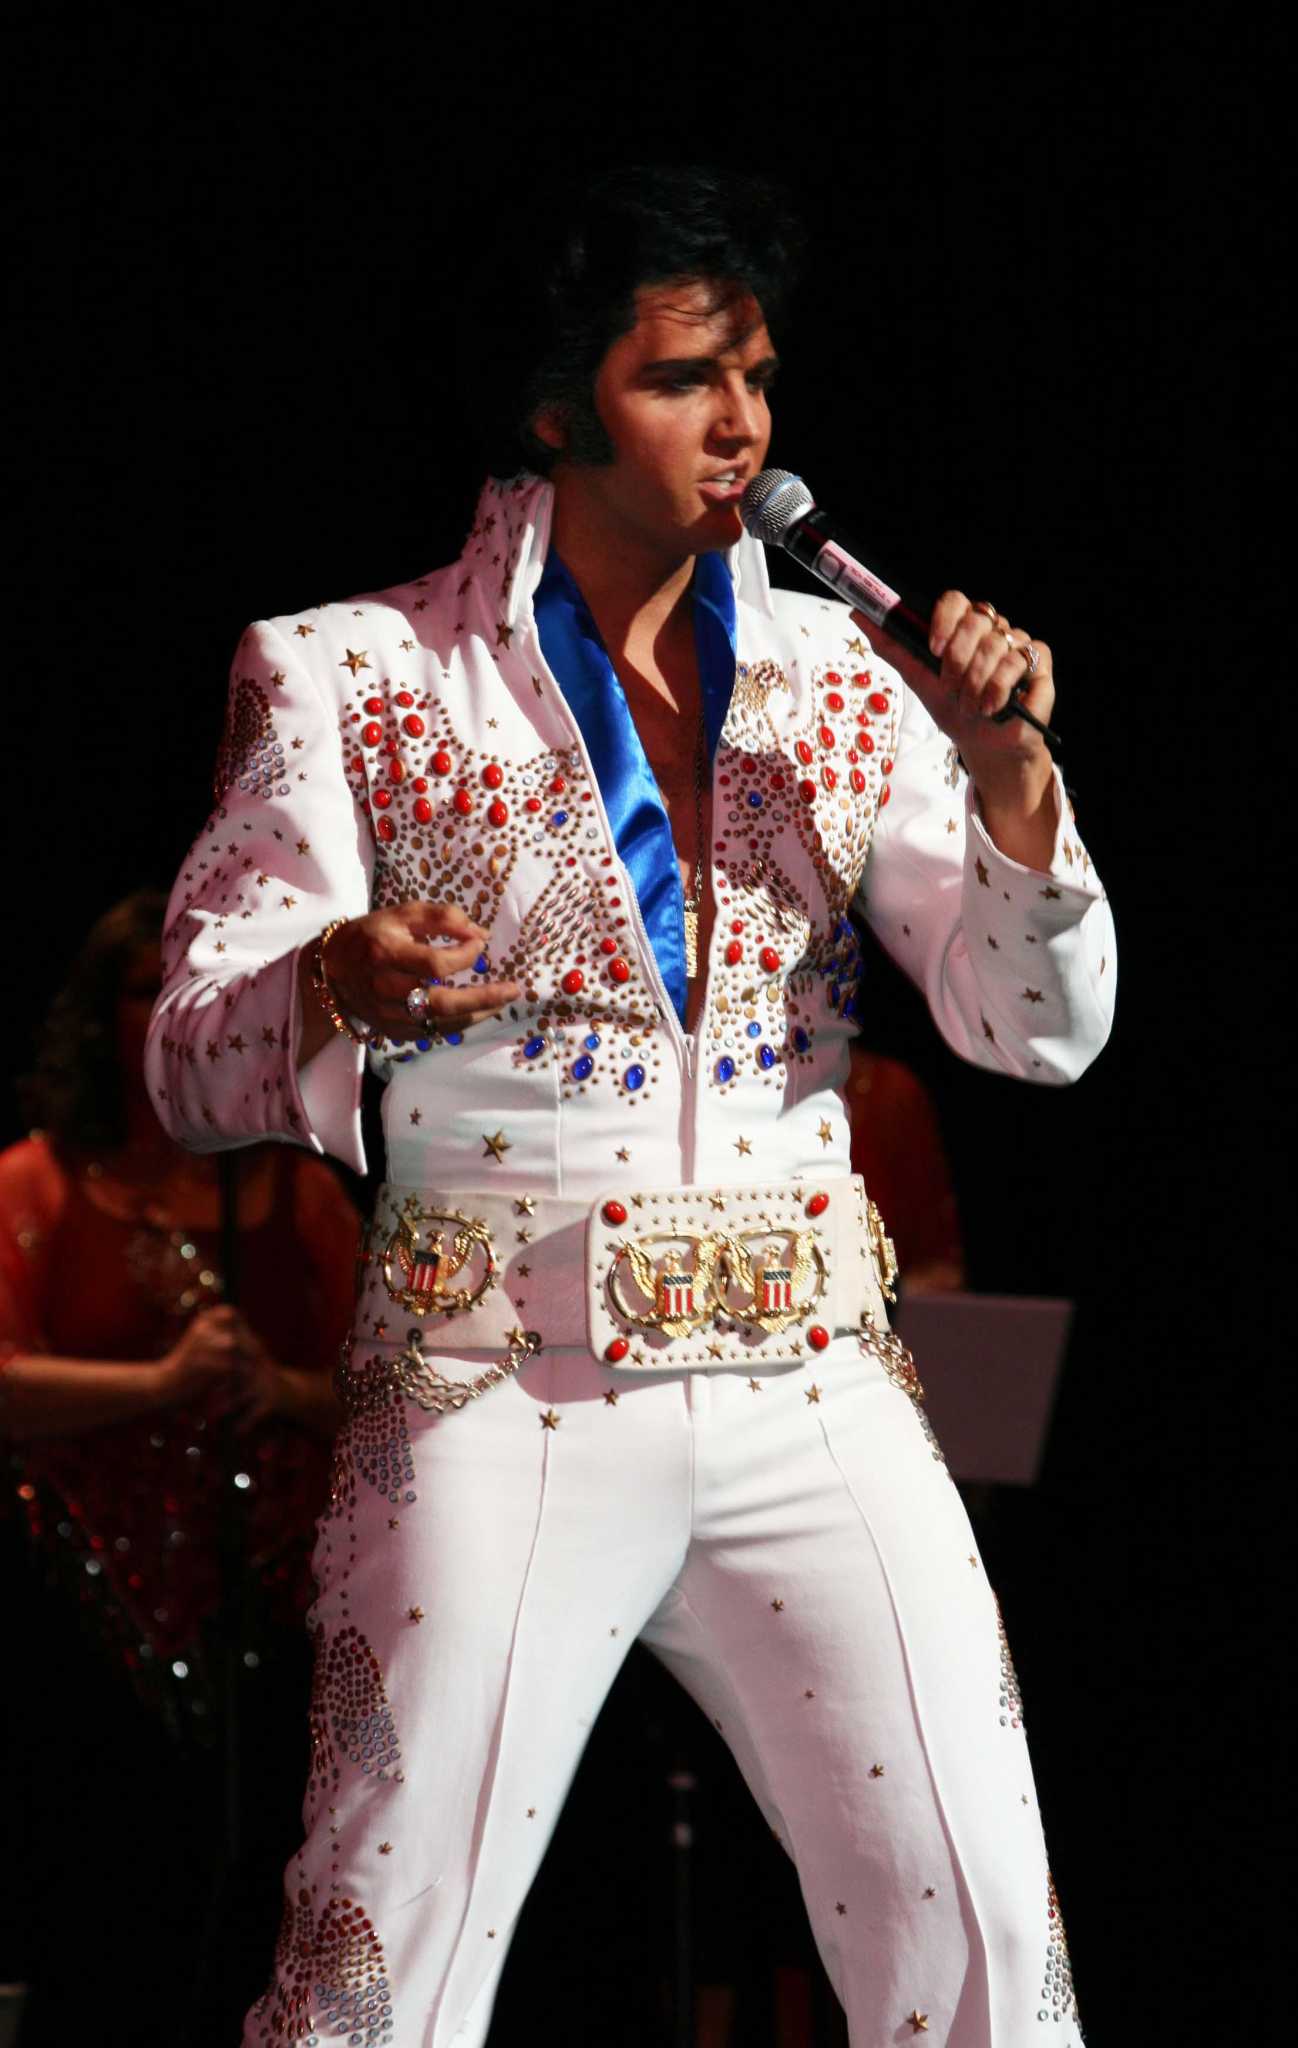 Donny Edwards brings Elvis Presley tribute March 26-27